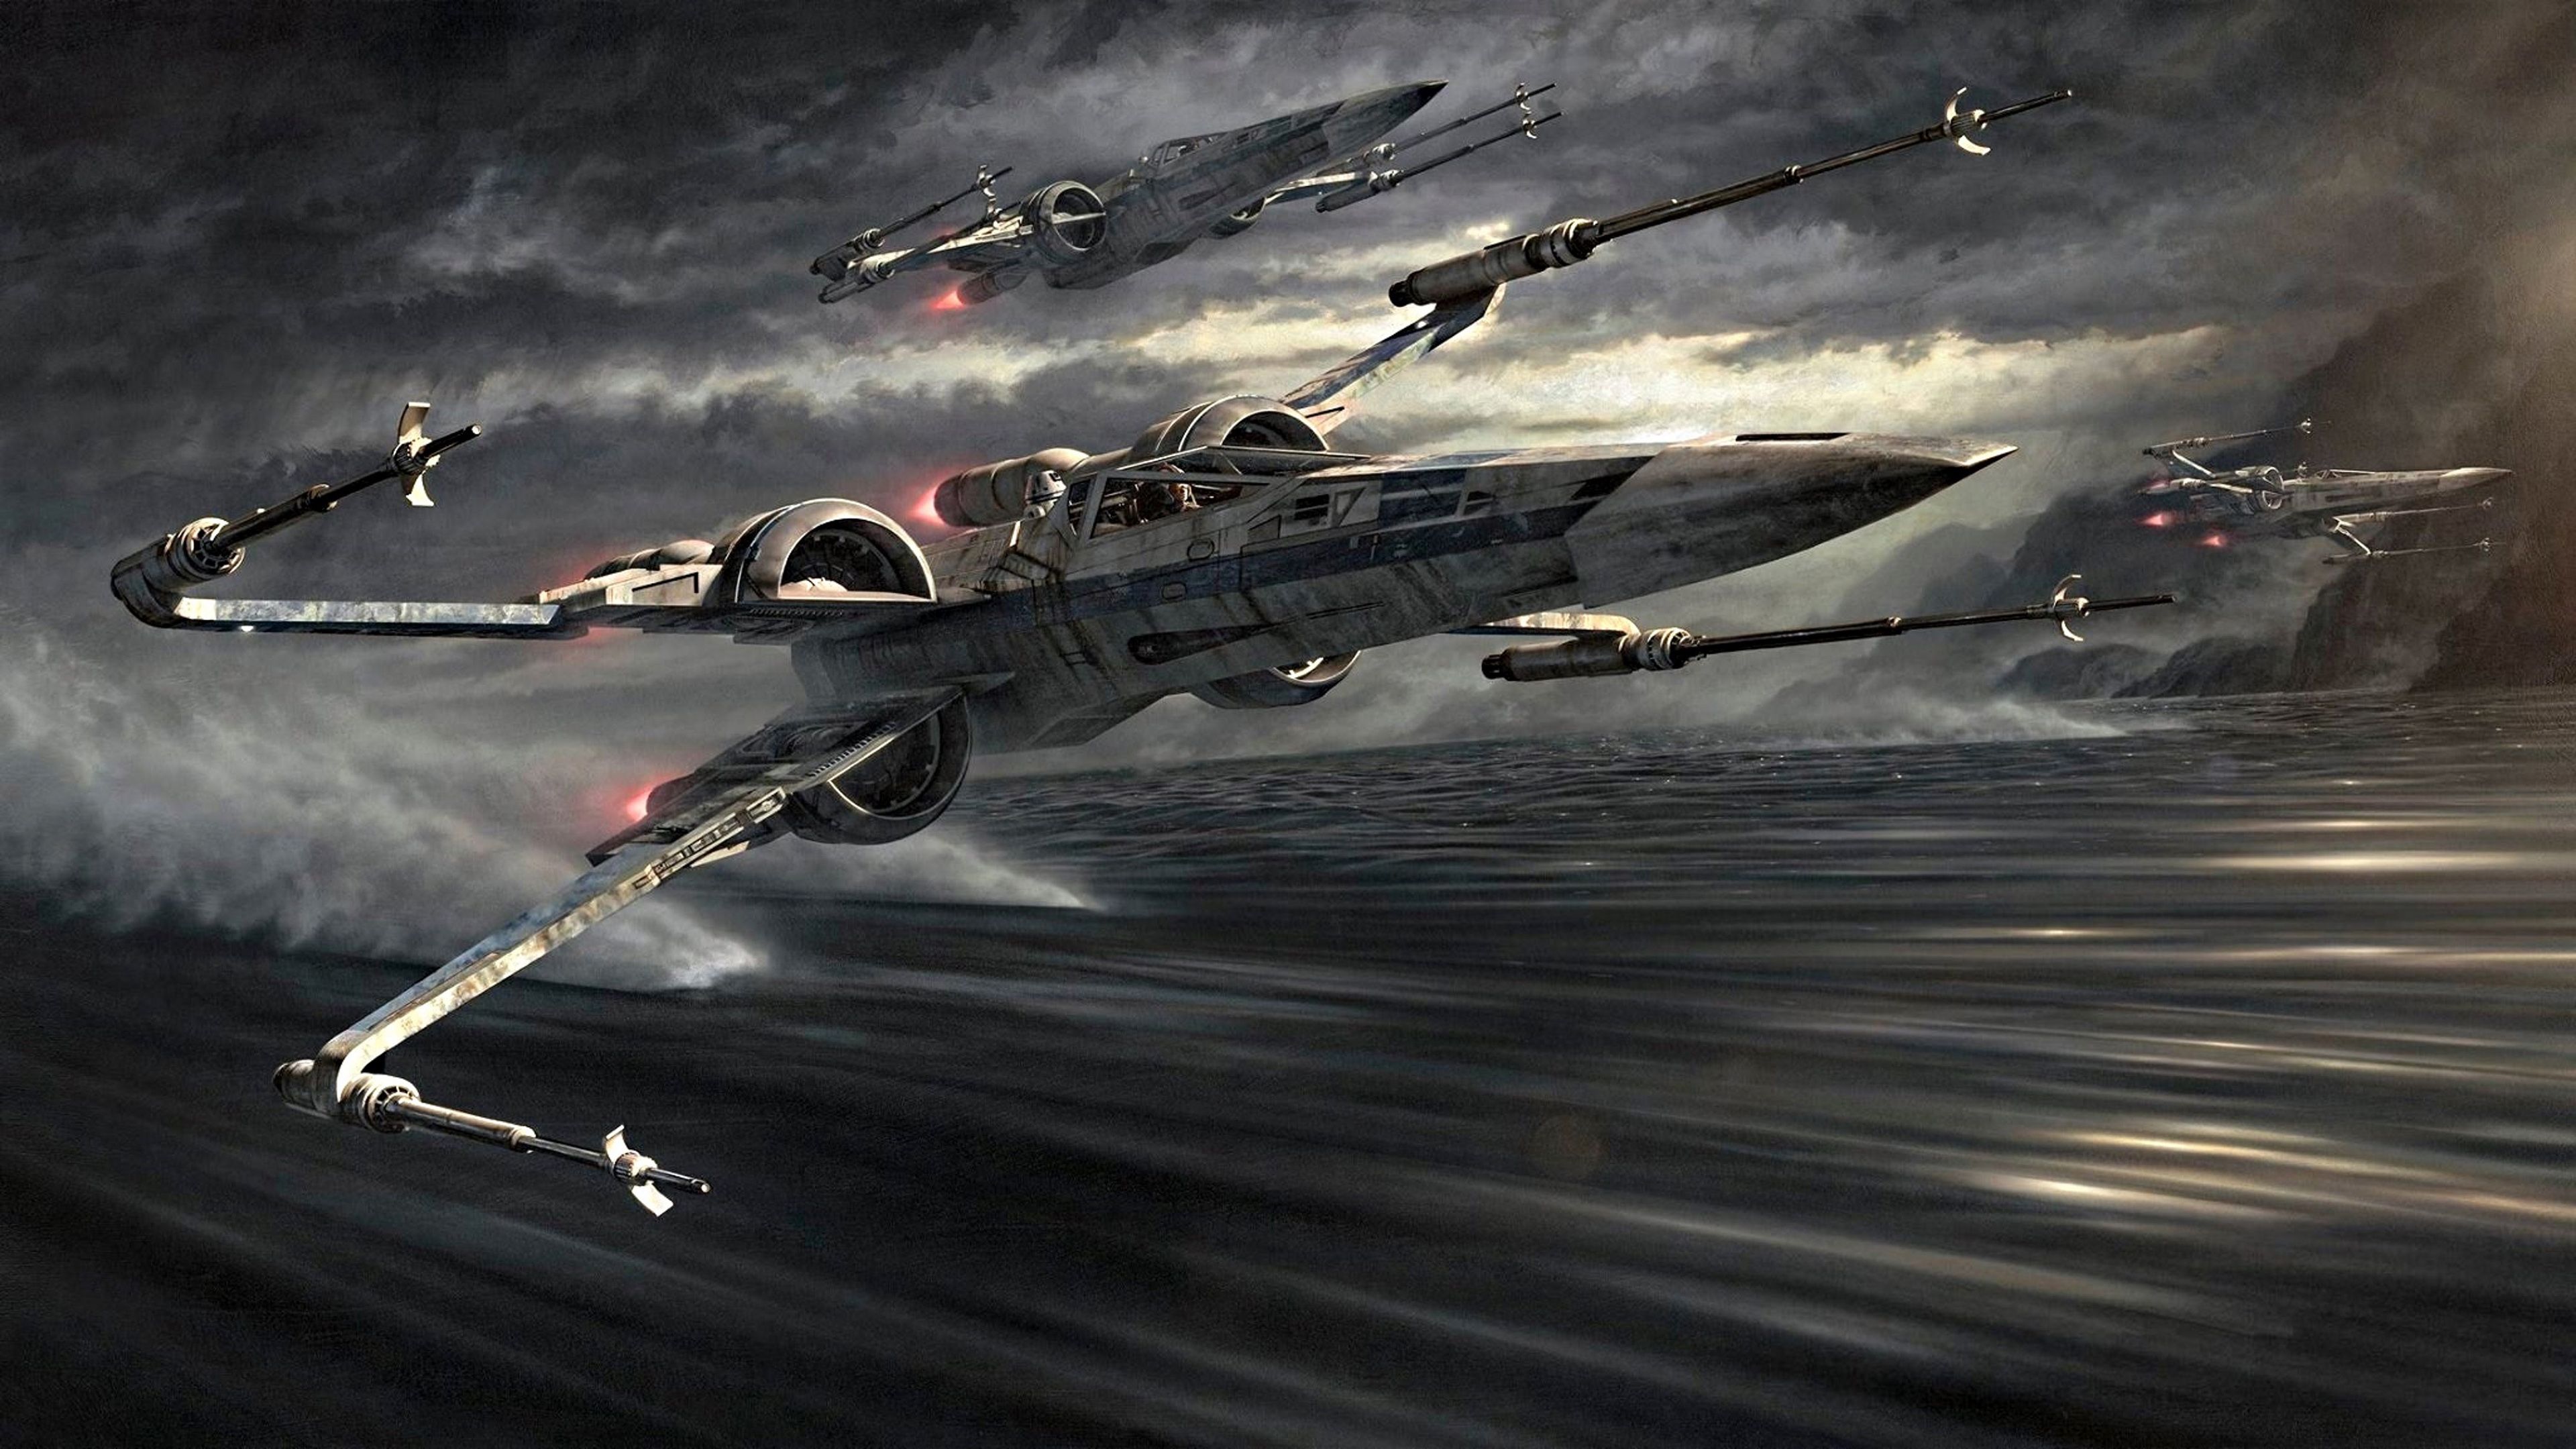 Star Wars Episode The Force Awakens X Wing Artwork By Jerry HD Wallpaper For Desktop, Wallpaper13.com